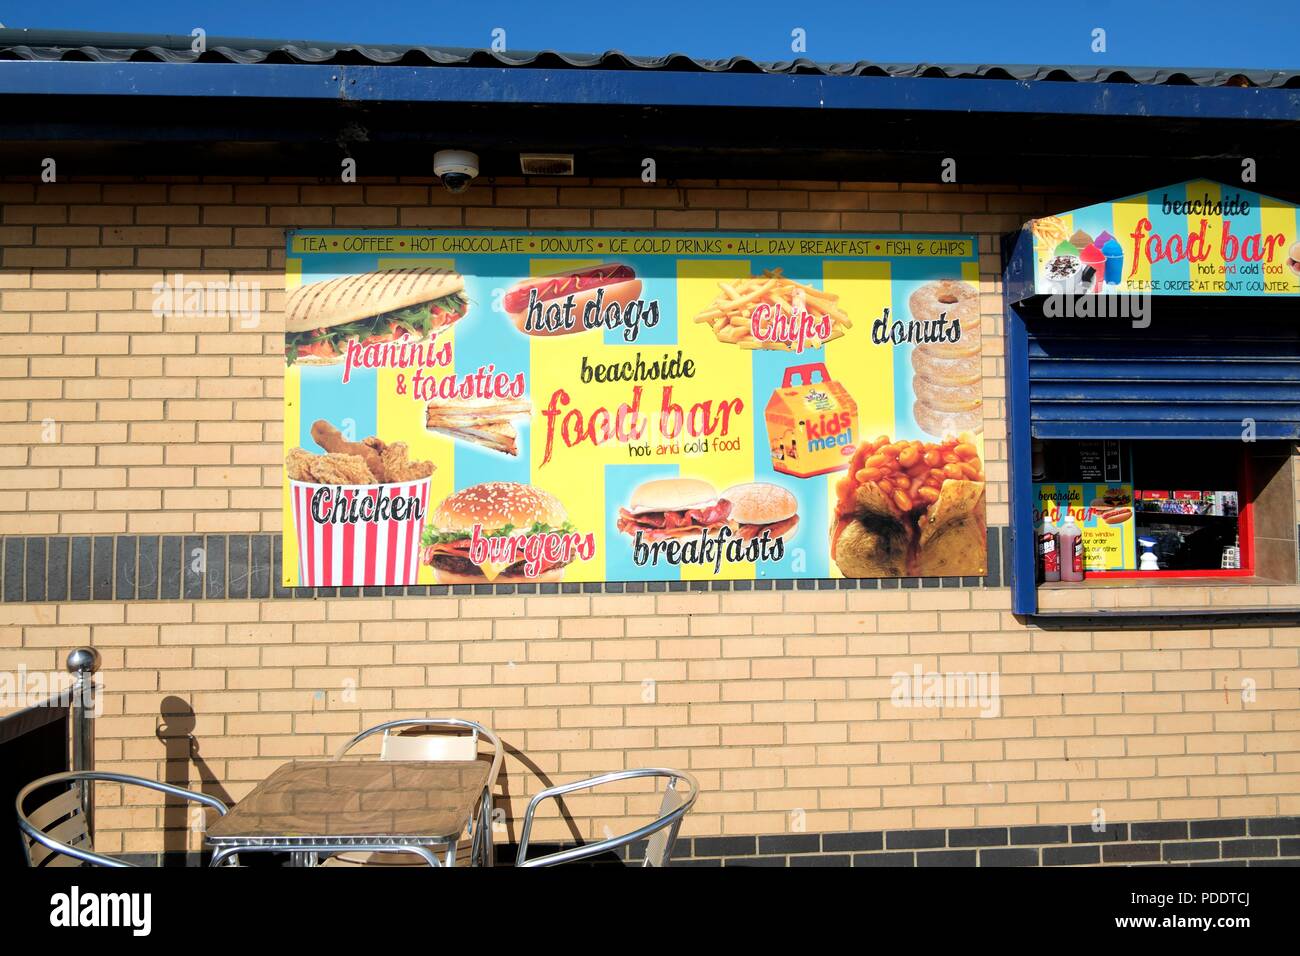 Fast Food bar menu, Skegness,Lincolnshire,England,UK Stock Photo - Alamy